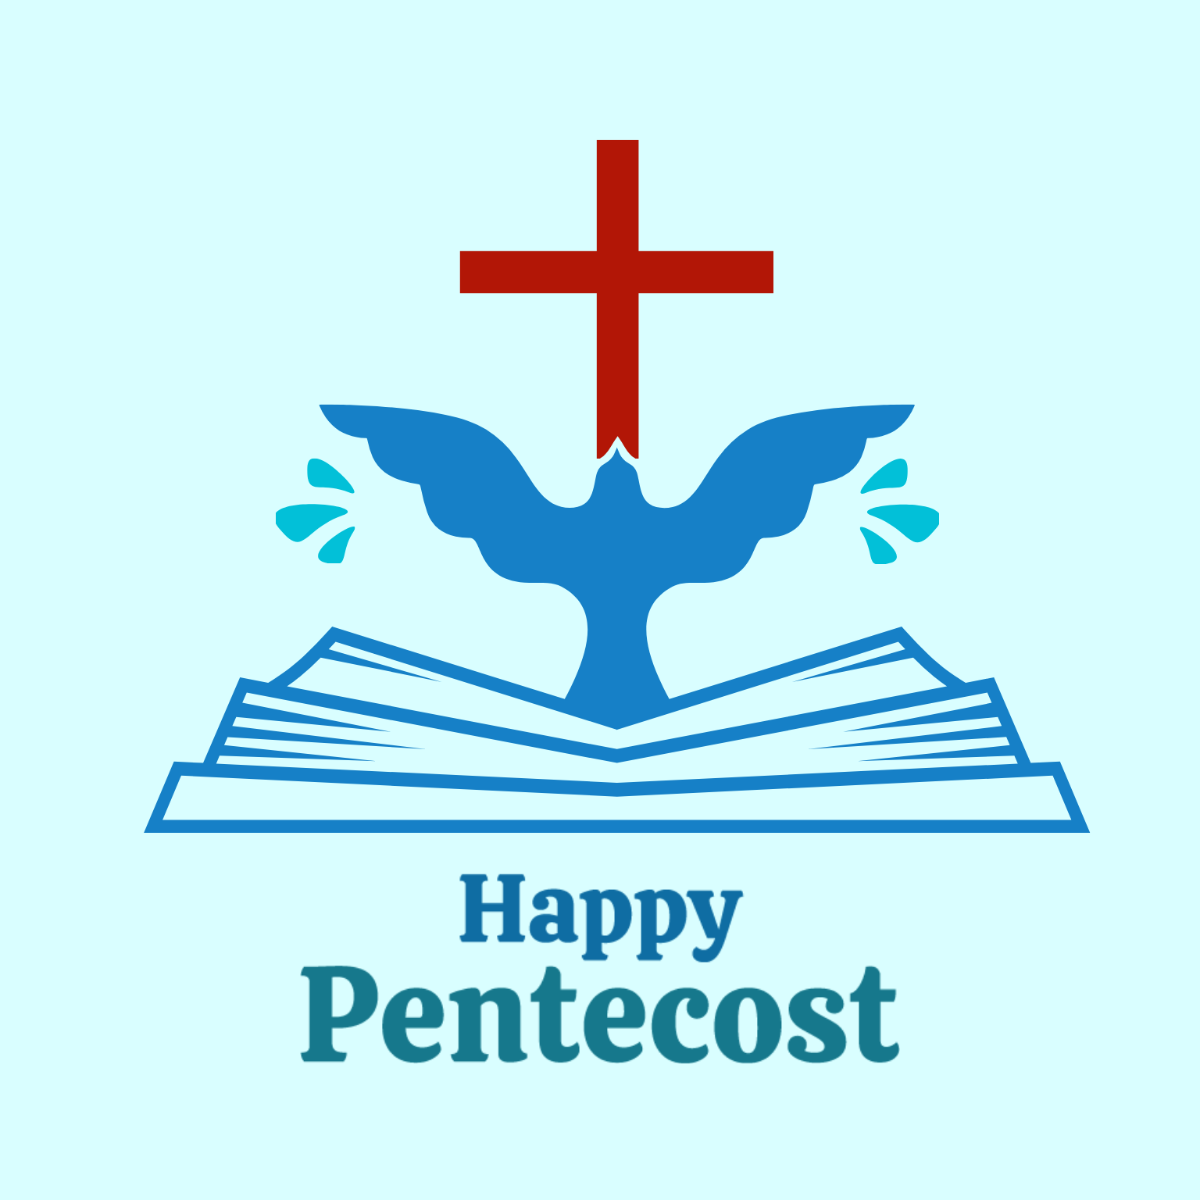 Happy Pentecost Illustration